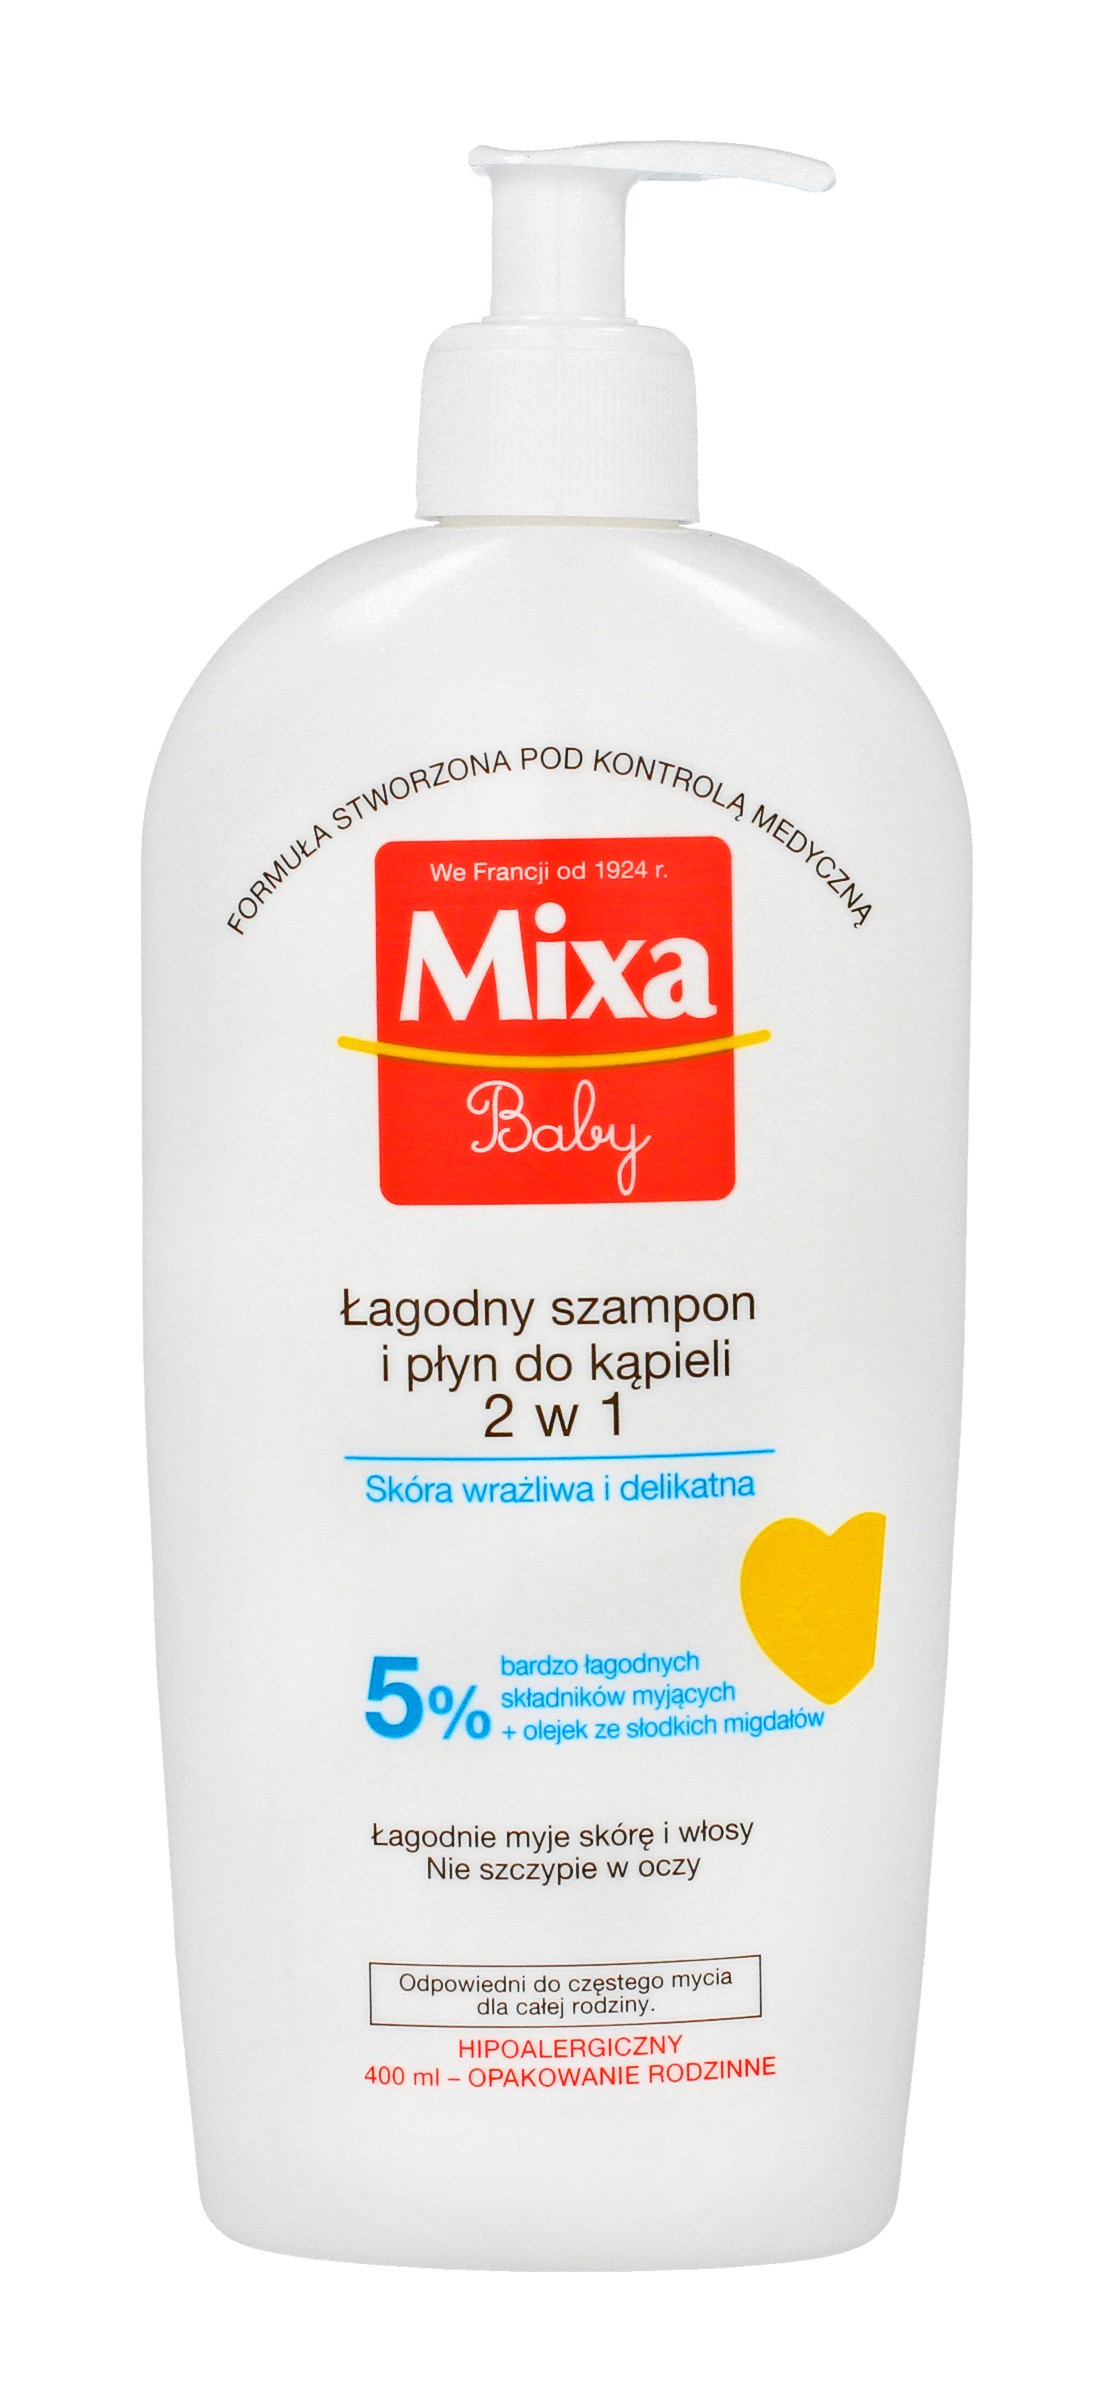 Mixa Baby Szampon 2w1  400ml